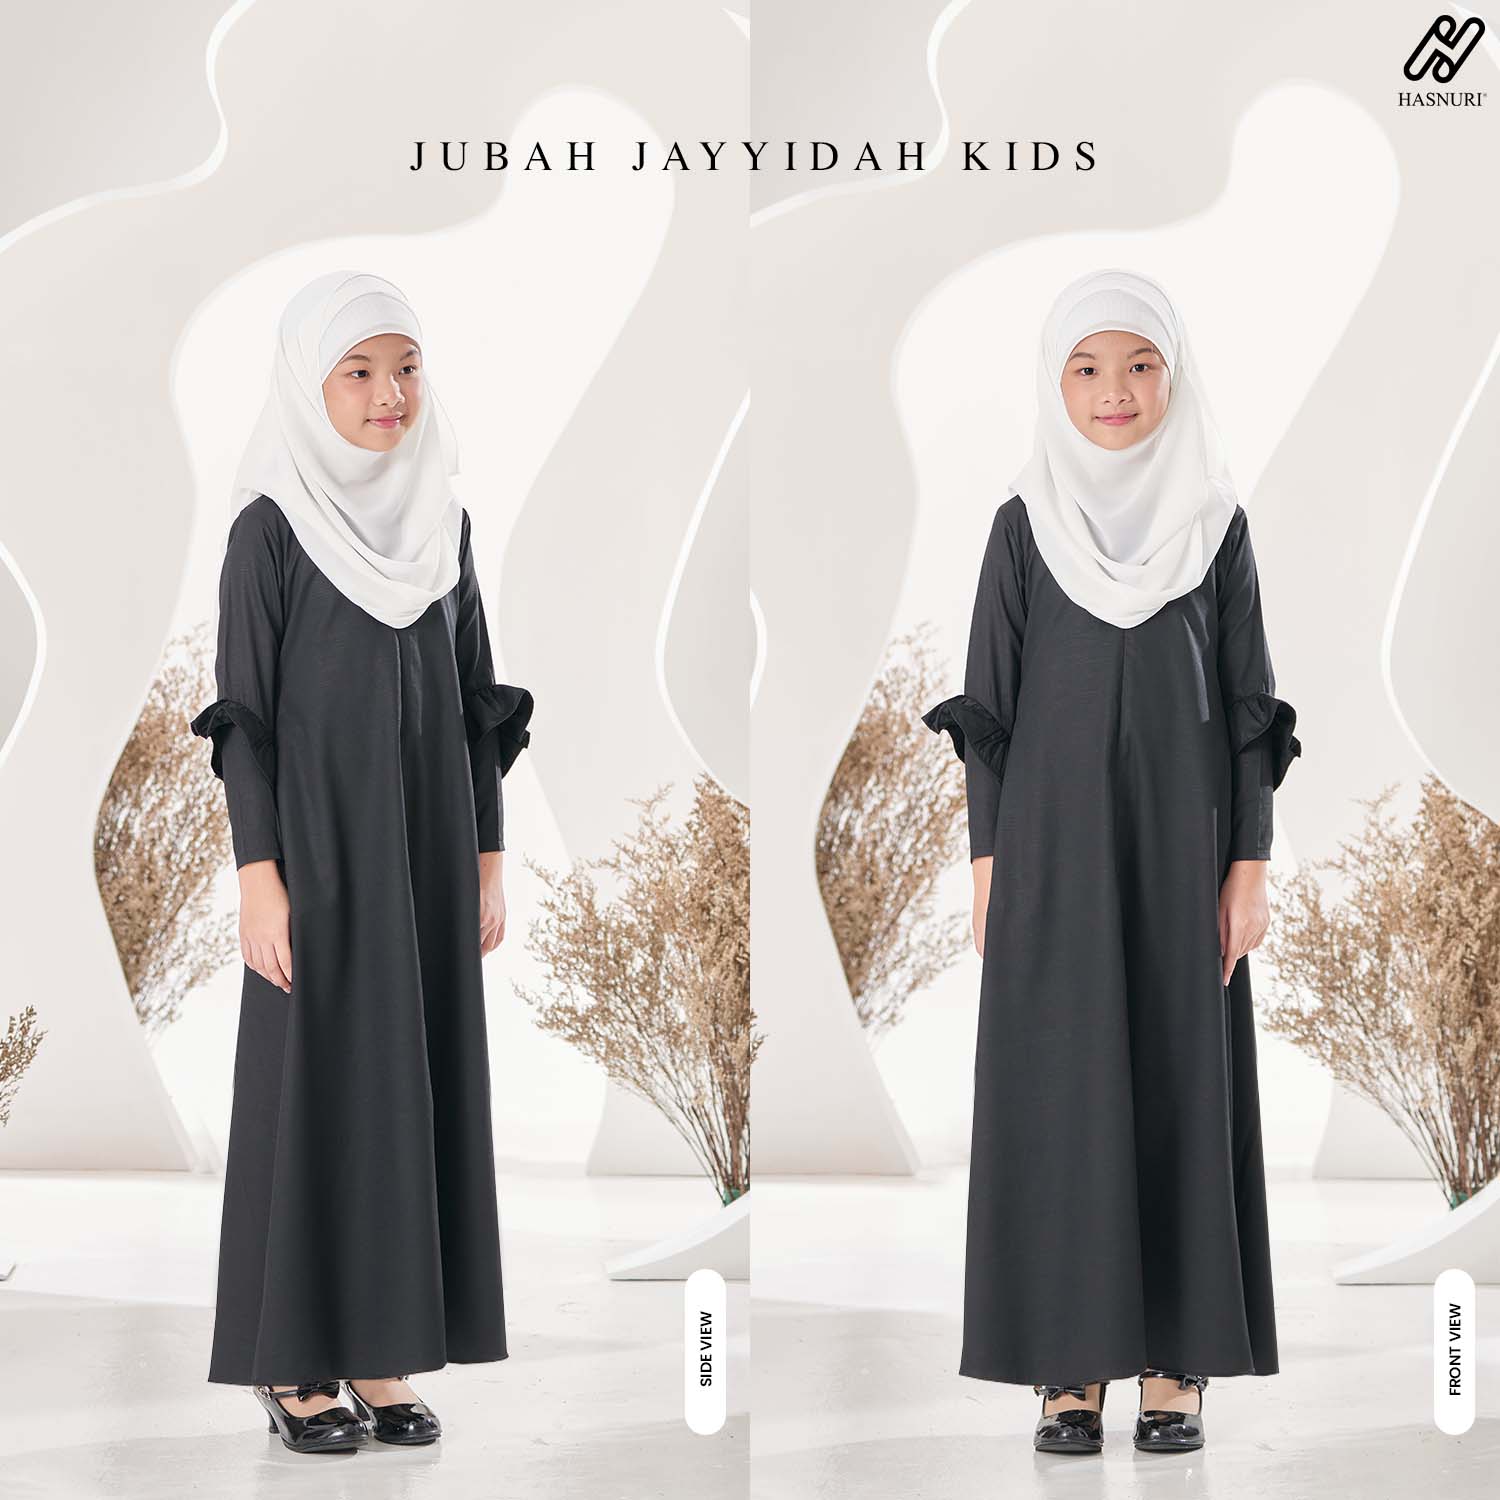 Jubah Jayyidah Kids - Black